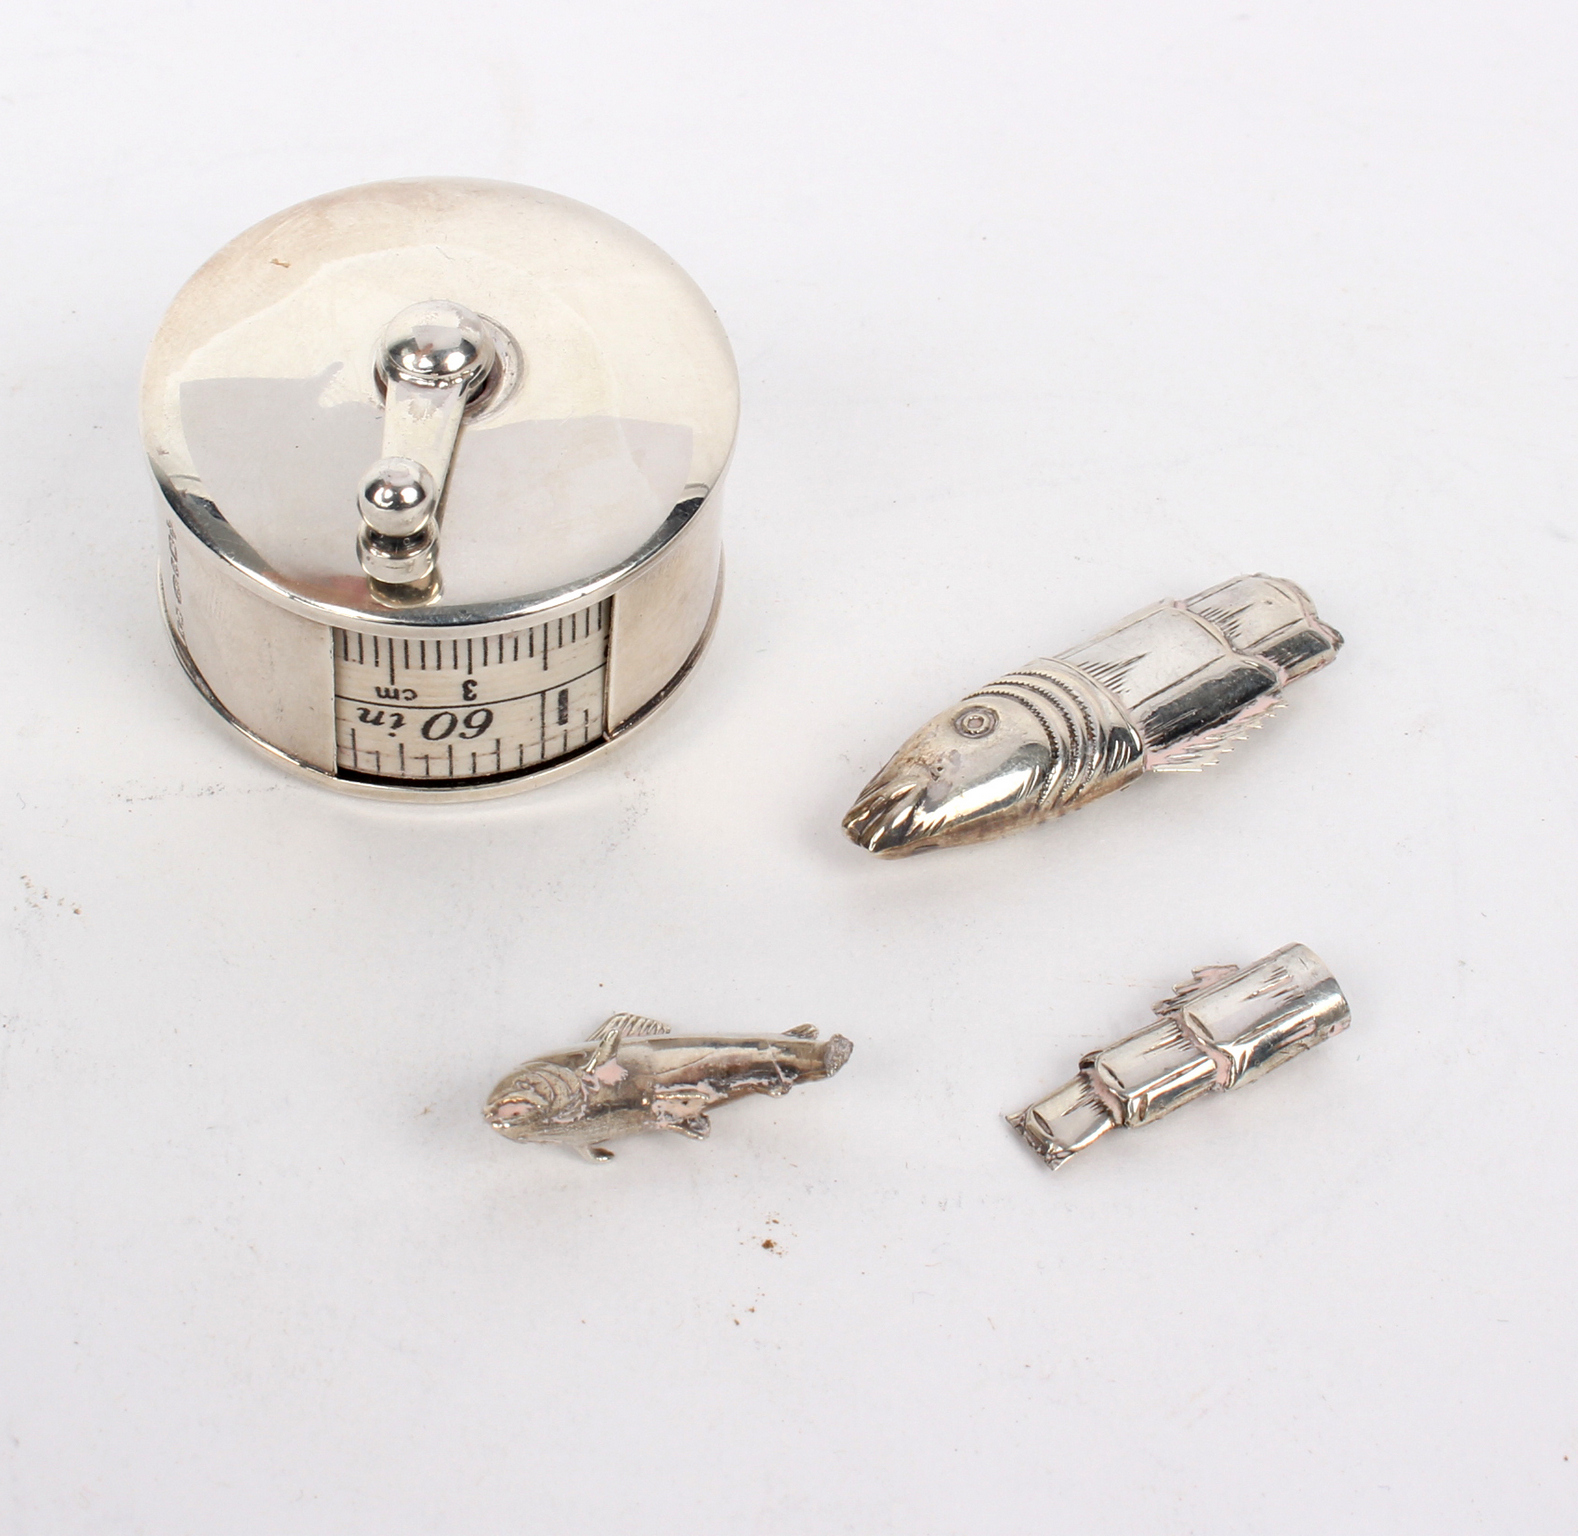 A novelty silver cased tape measure, WW, Birmingham 2000, of fishing reel form,